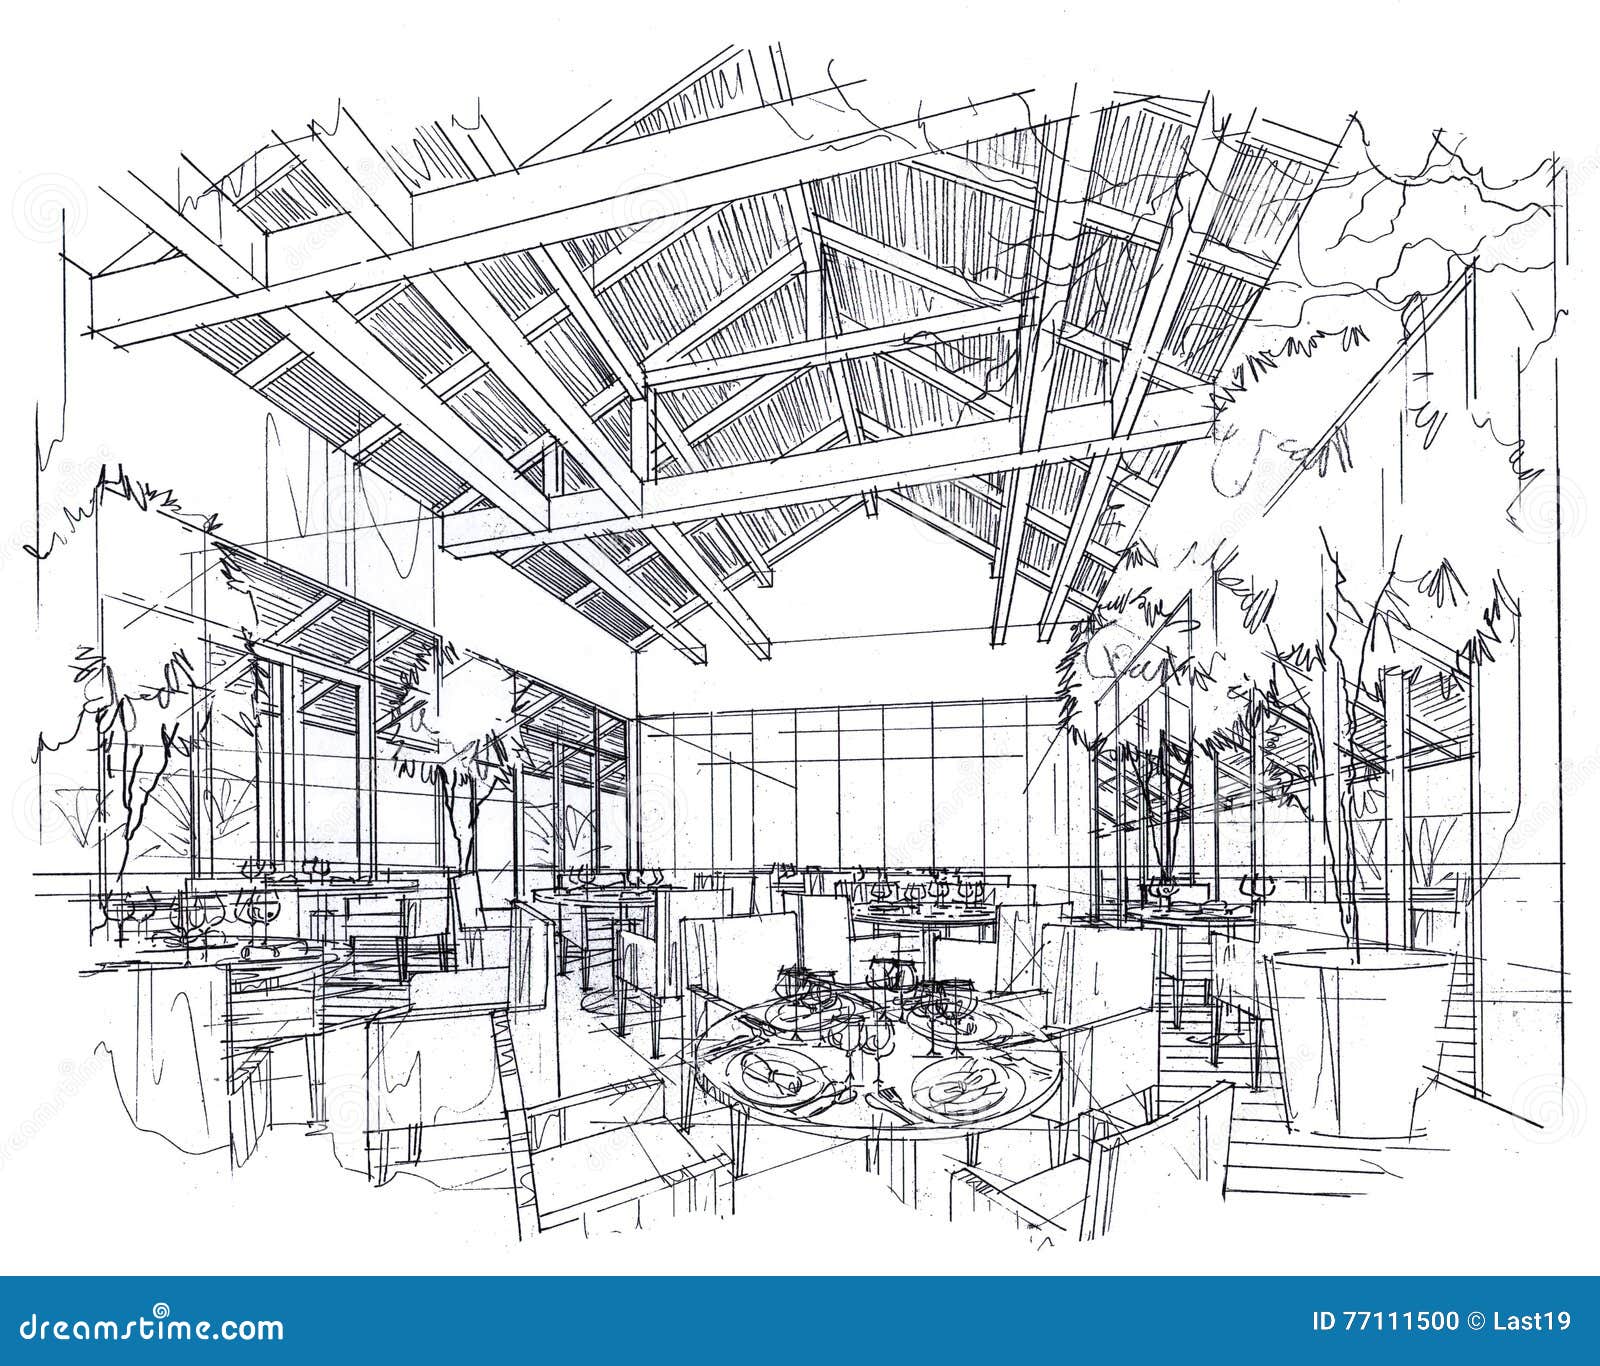 Restaurant Interior Ideas: The Gallery at Sketch